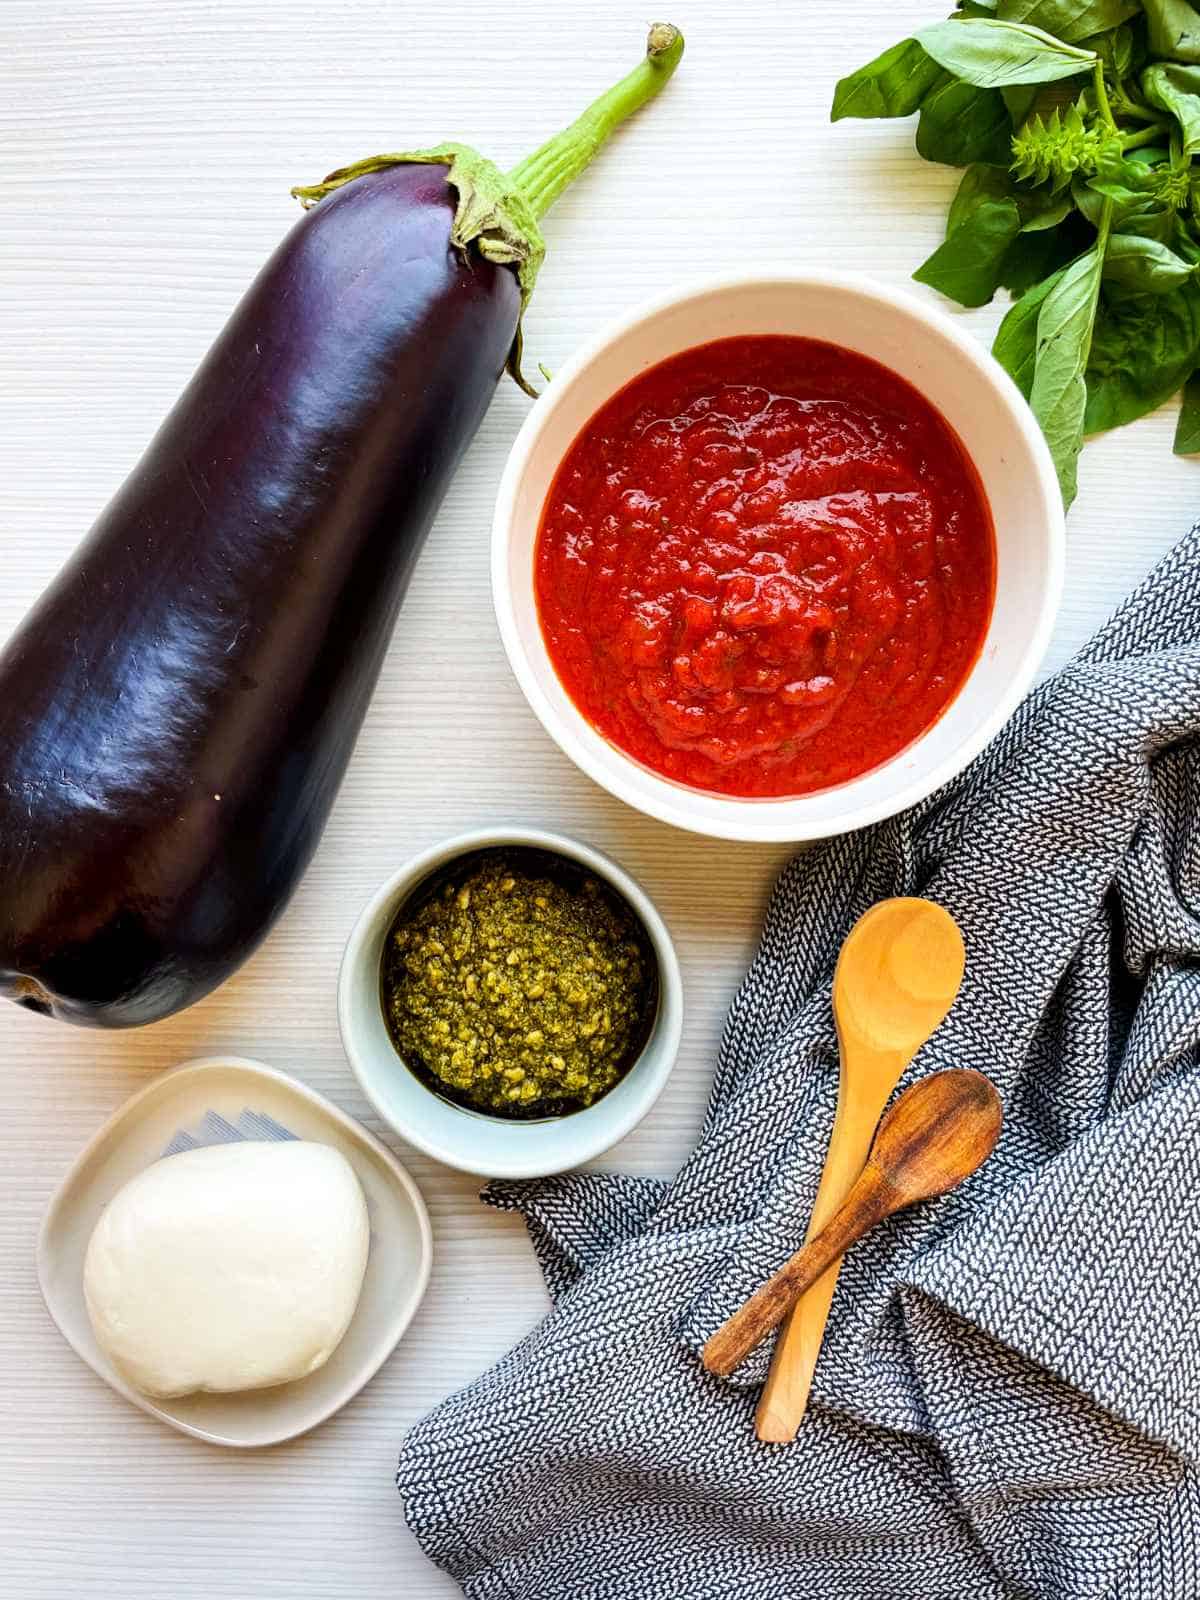 ingredients for eggplant Parmesan casserole.